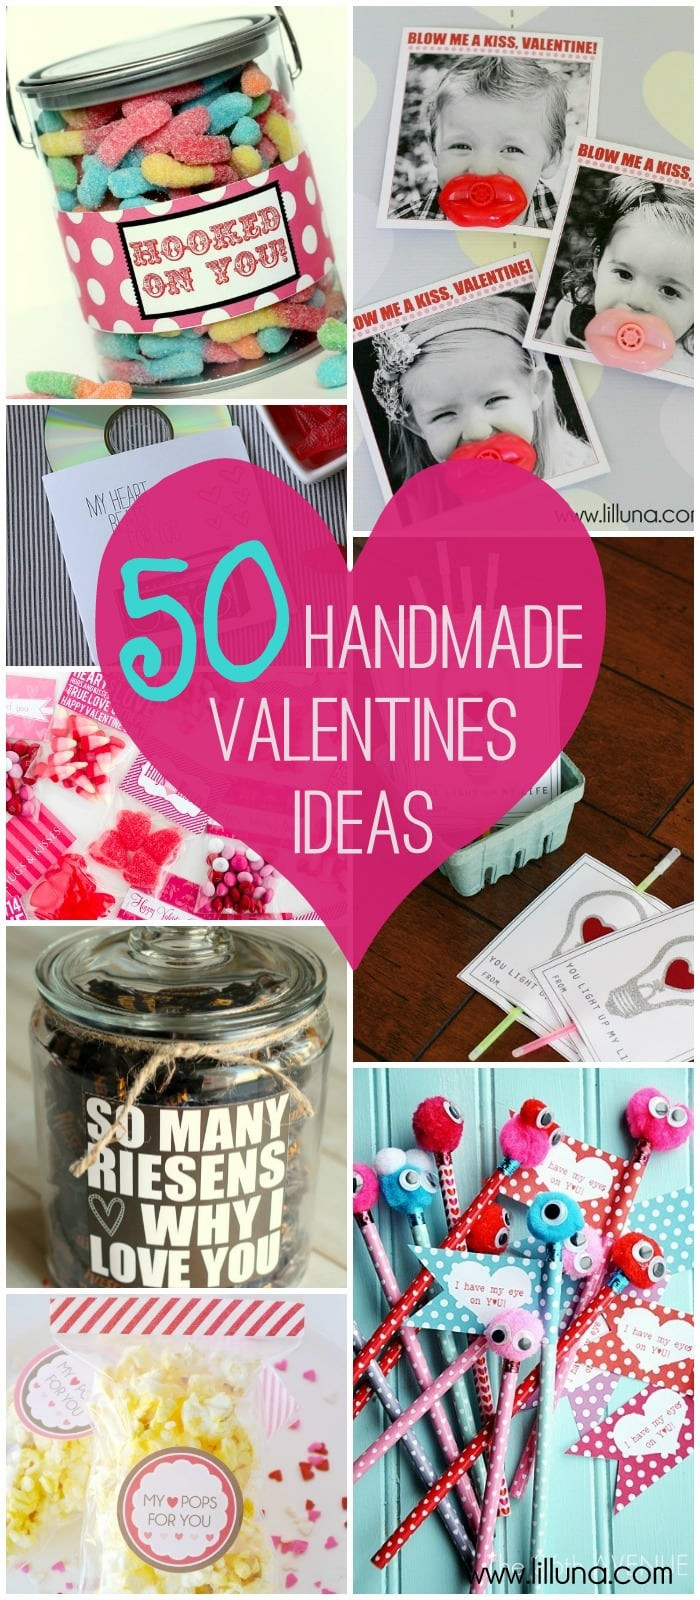 Thoughtful Valentine Gift Ideas
 Wife Valentine s Day Gift Ideas St Valentine s Day Gift